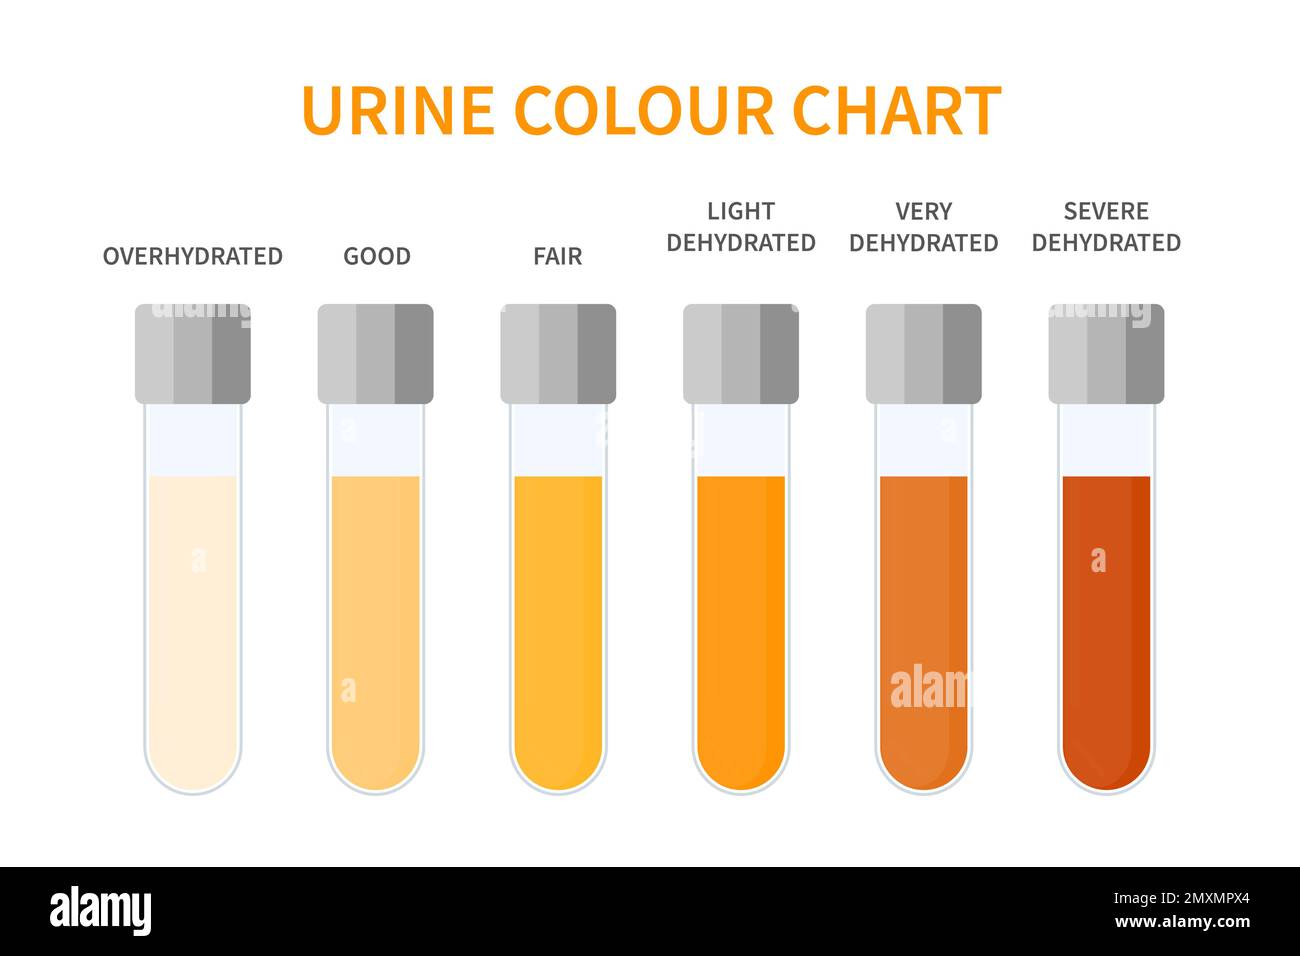 Urine colour chart, illustration Stock Photo - Alamy